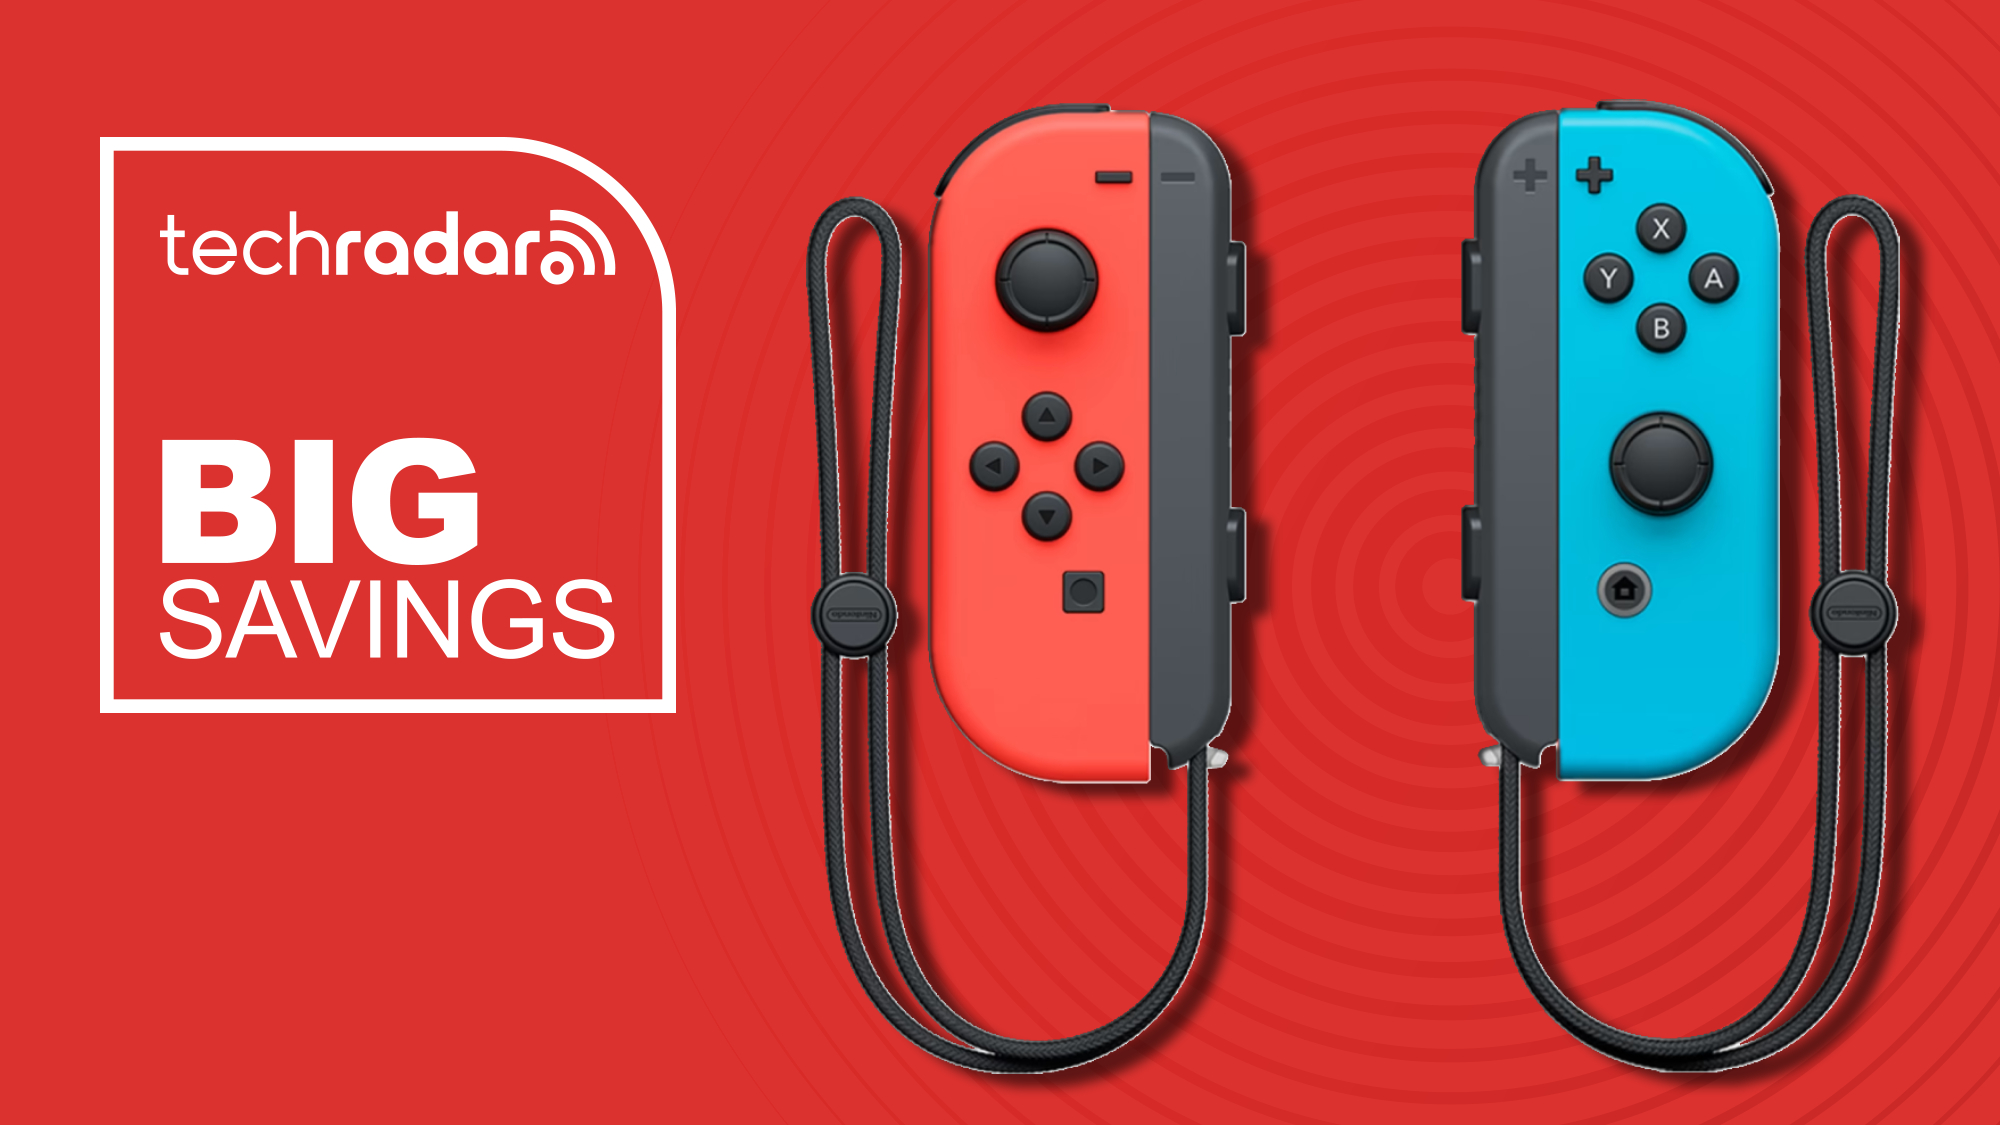 Nintendo Switch Joy-con L/r Neon Red/neon Blue : Target